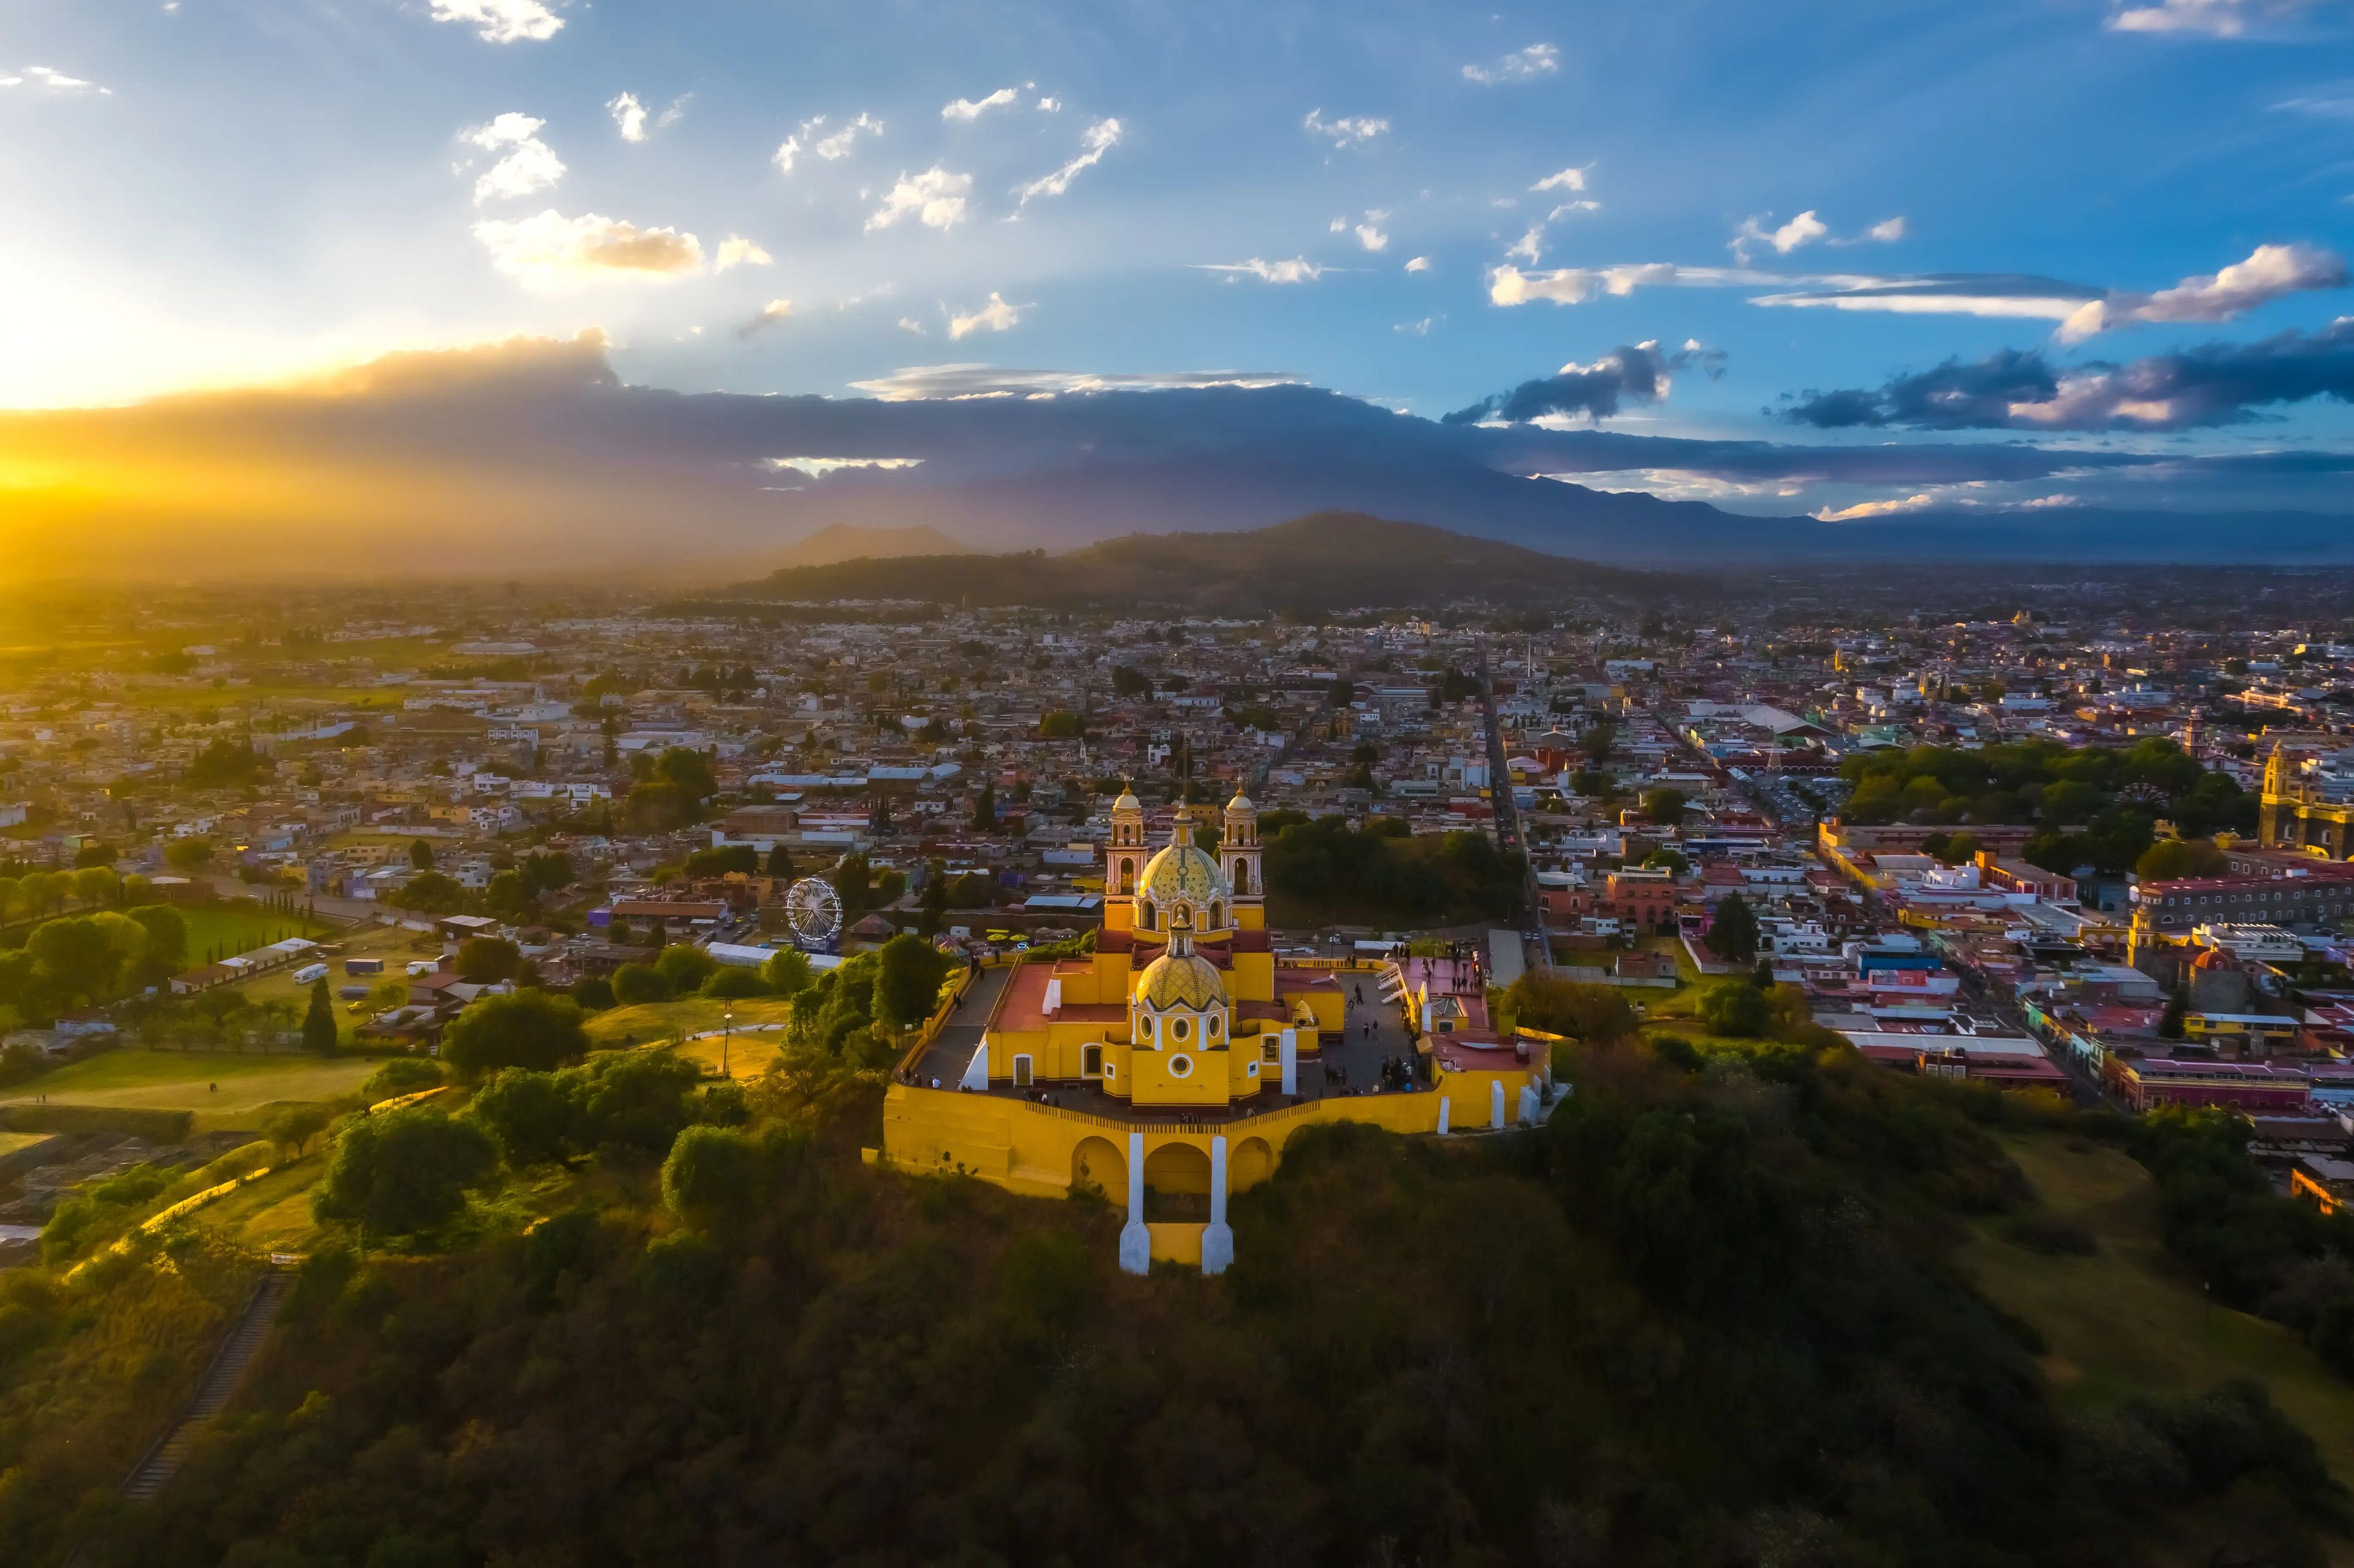 An city view of Puebla, Mexico